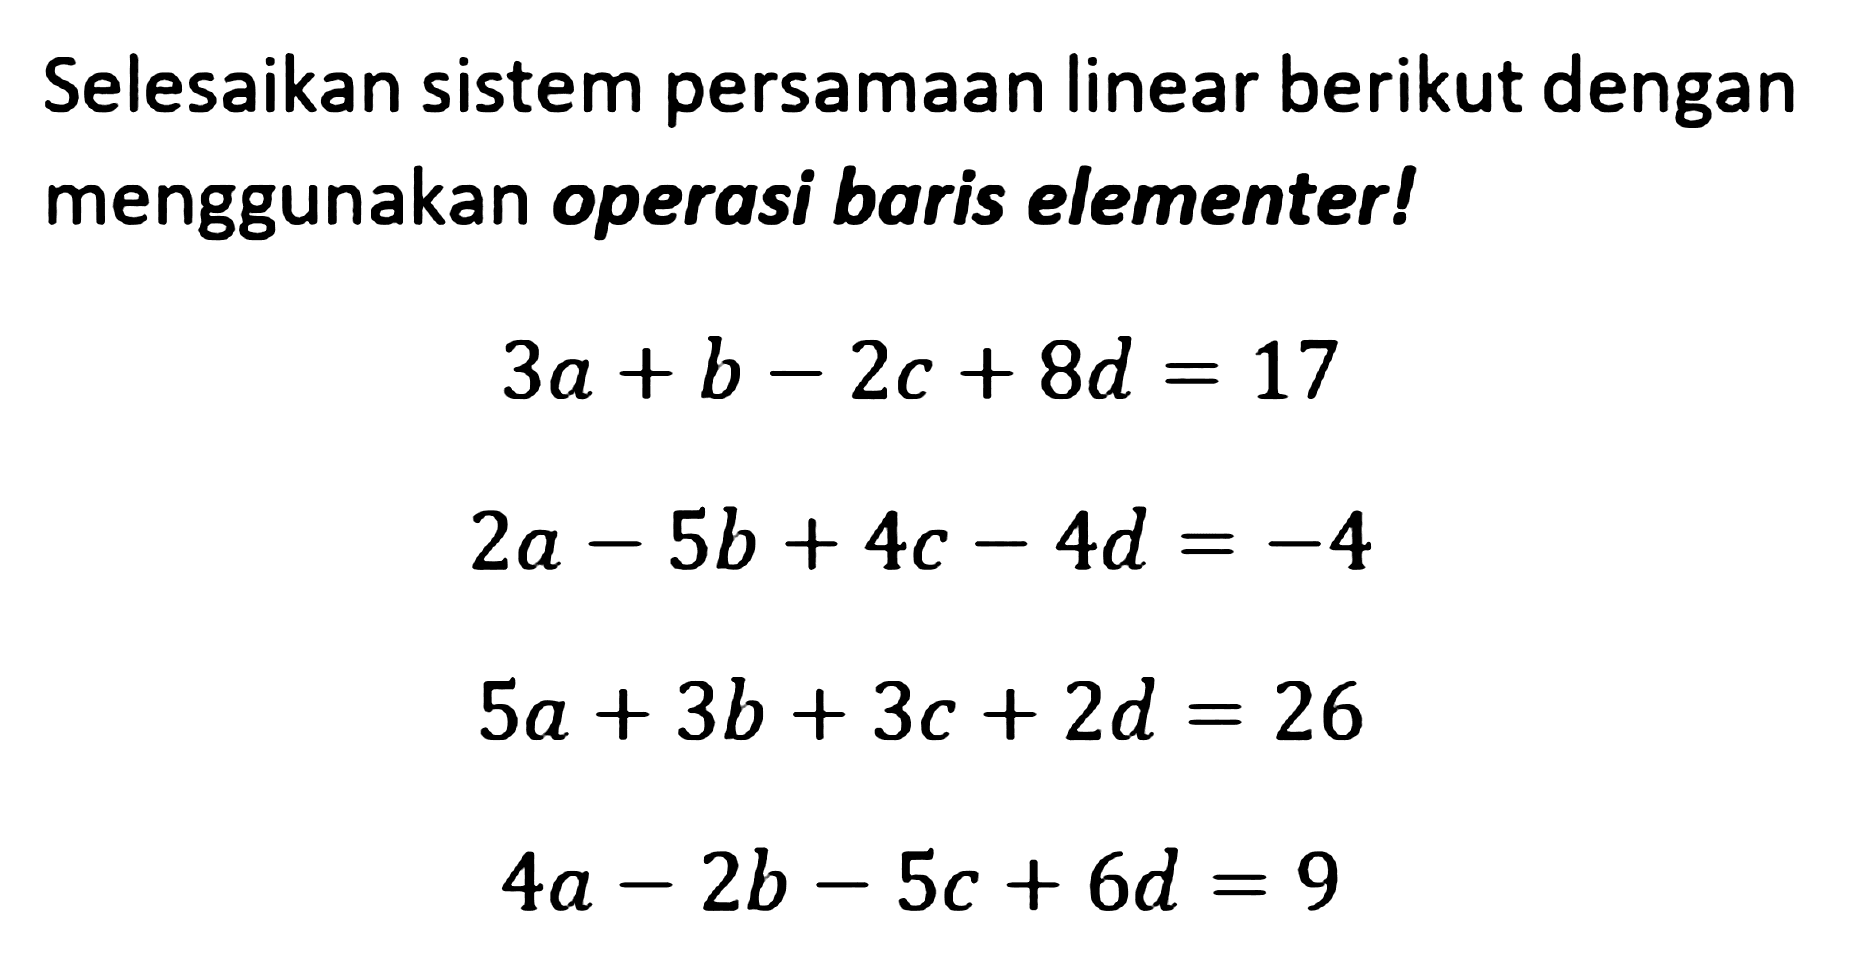 Selesaikan sistem persamaan linear berikut dengan menggunakan operasi baris elementer! 3a+b-2c+8d=17 2a-5b+4c-4d=-4 5a+3b+3c+2d=26 4a-2b-5c+6d=9